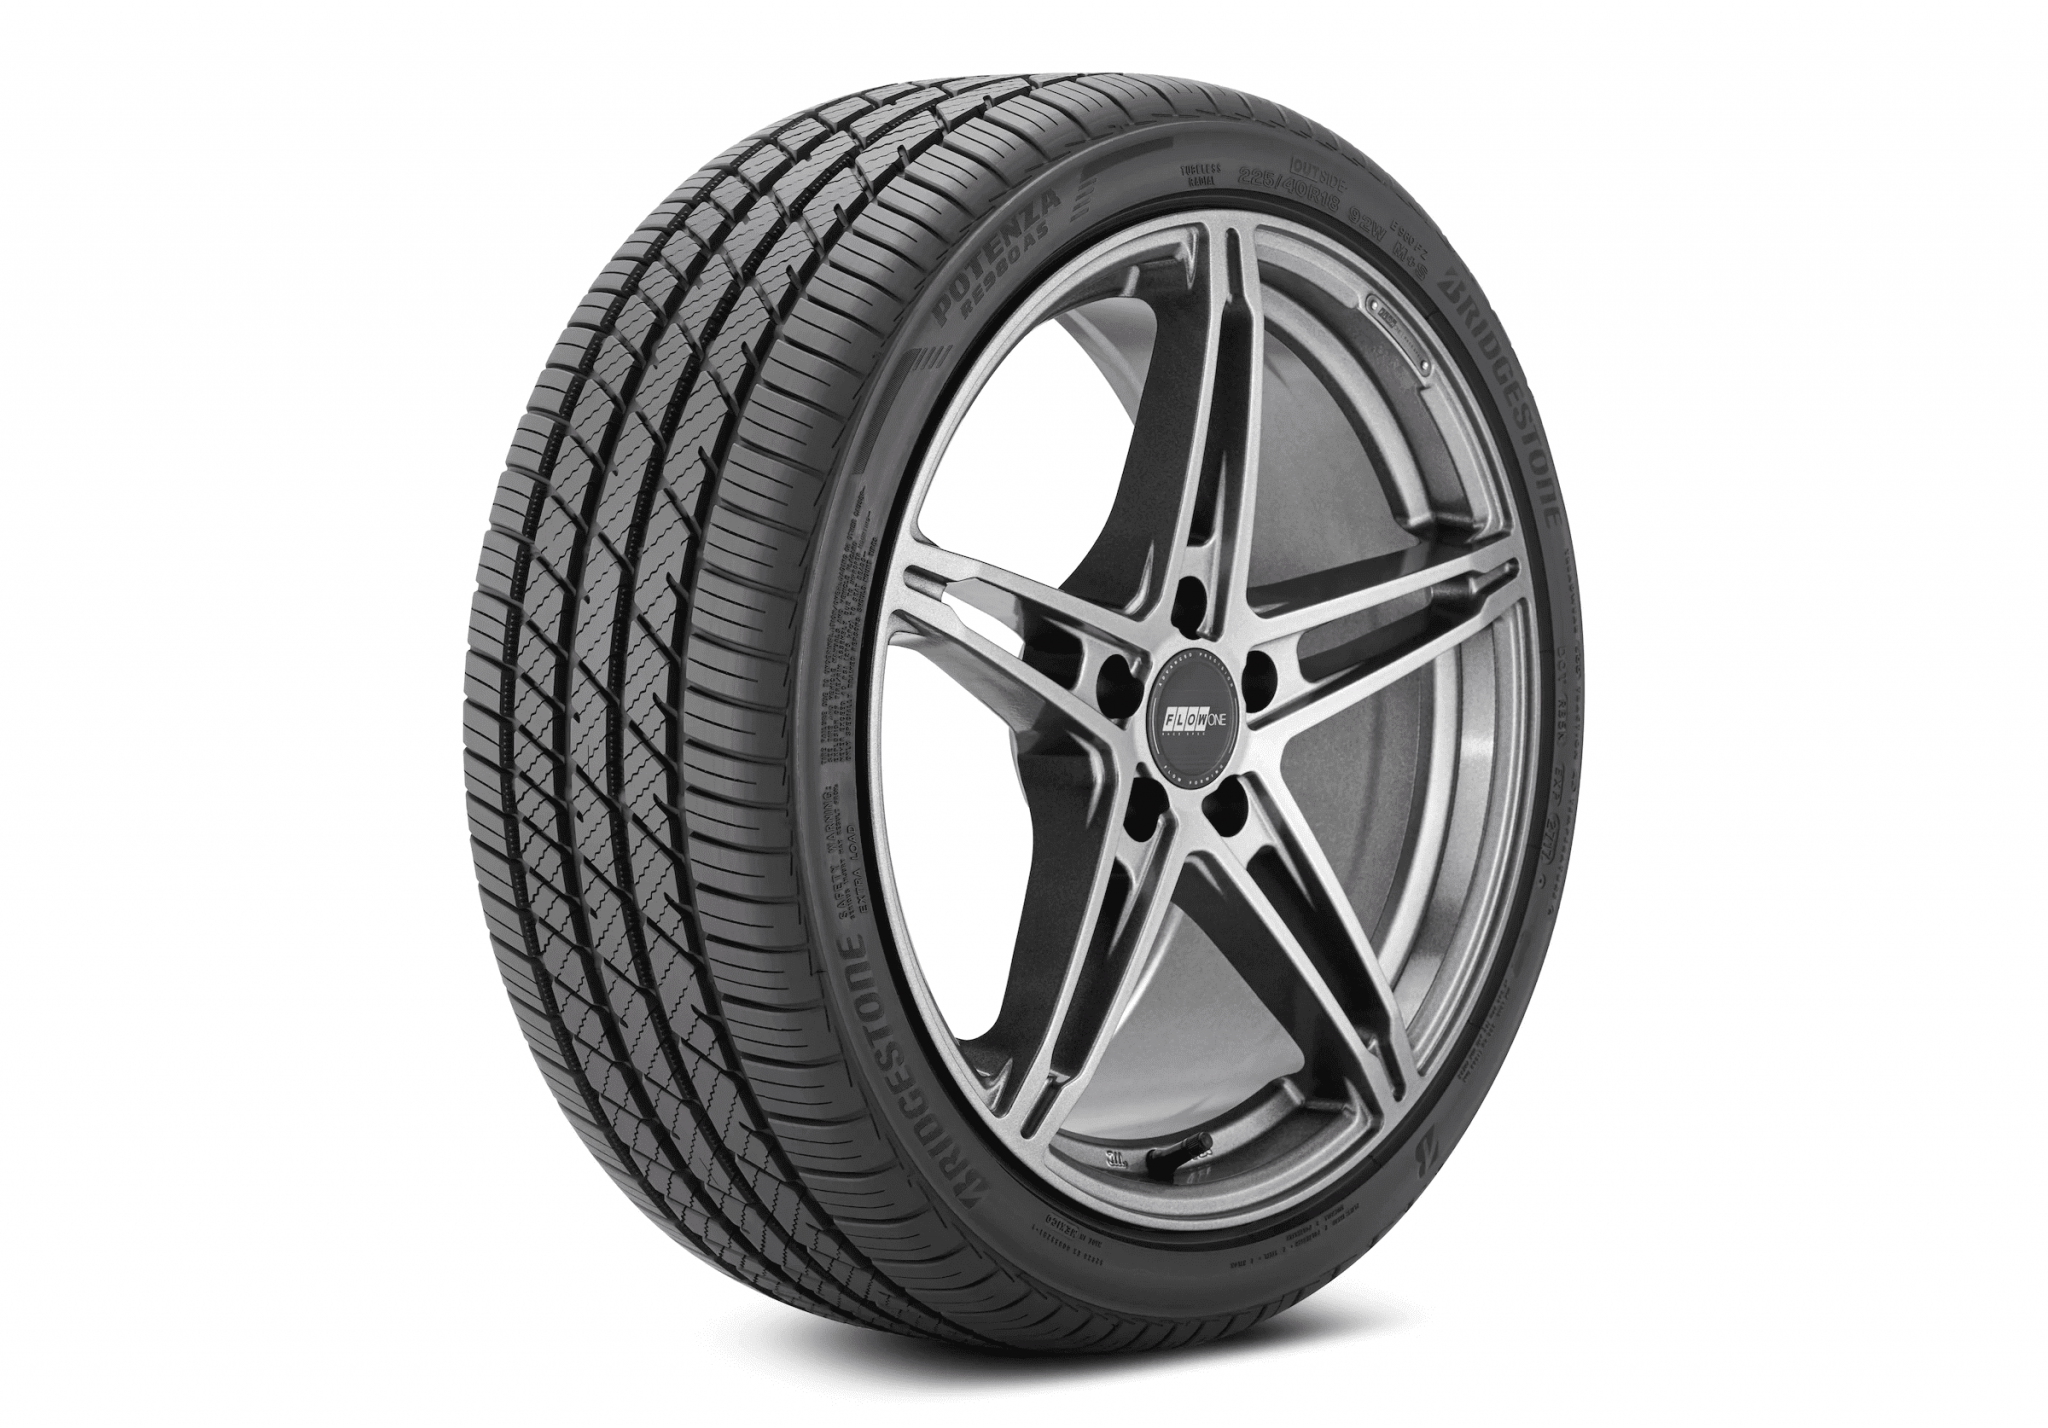 bridgestone-potenza-re980as-tires-review-tire-space-tires-reviews